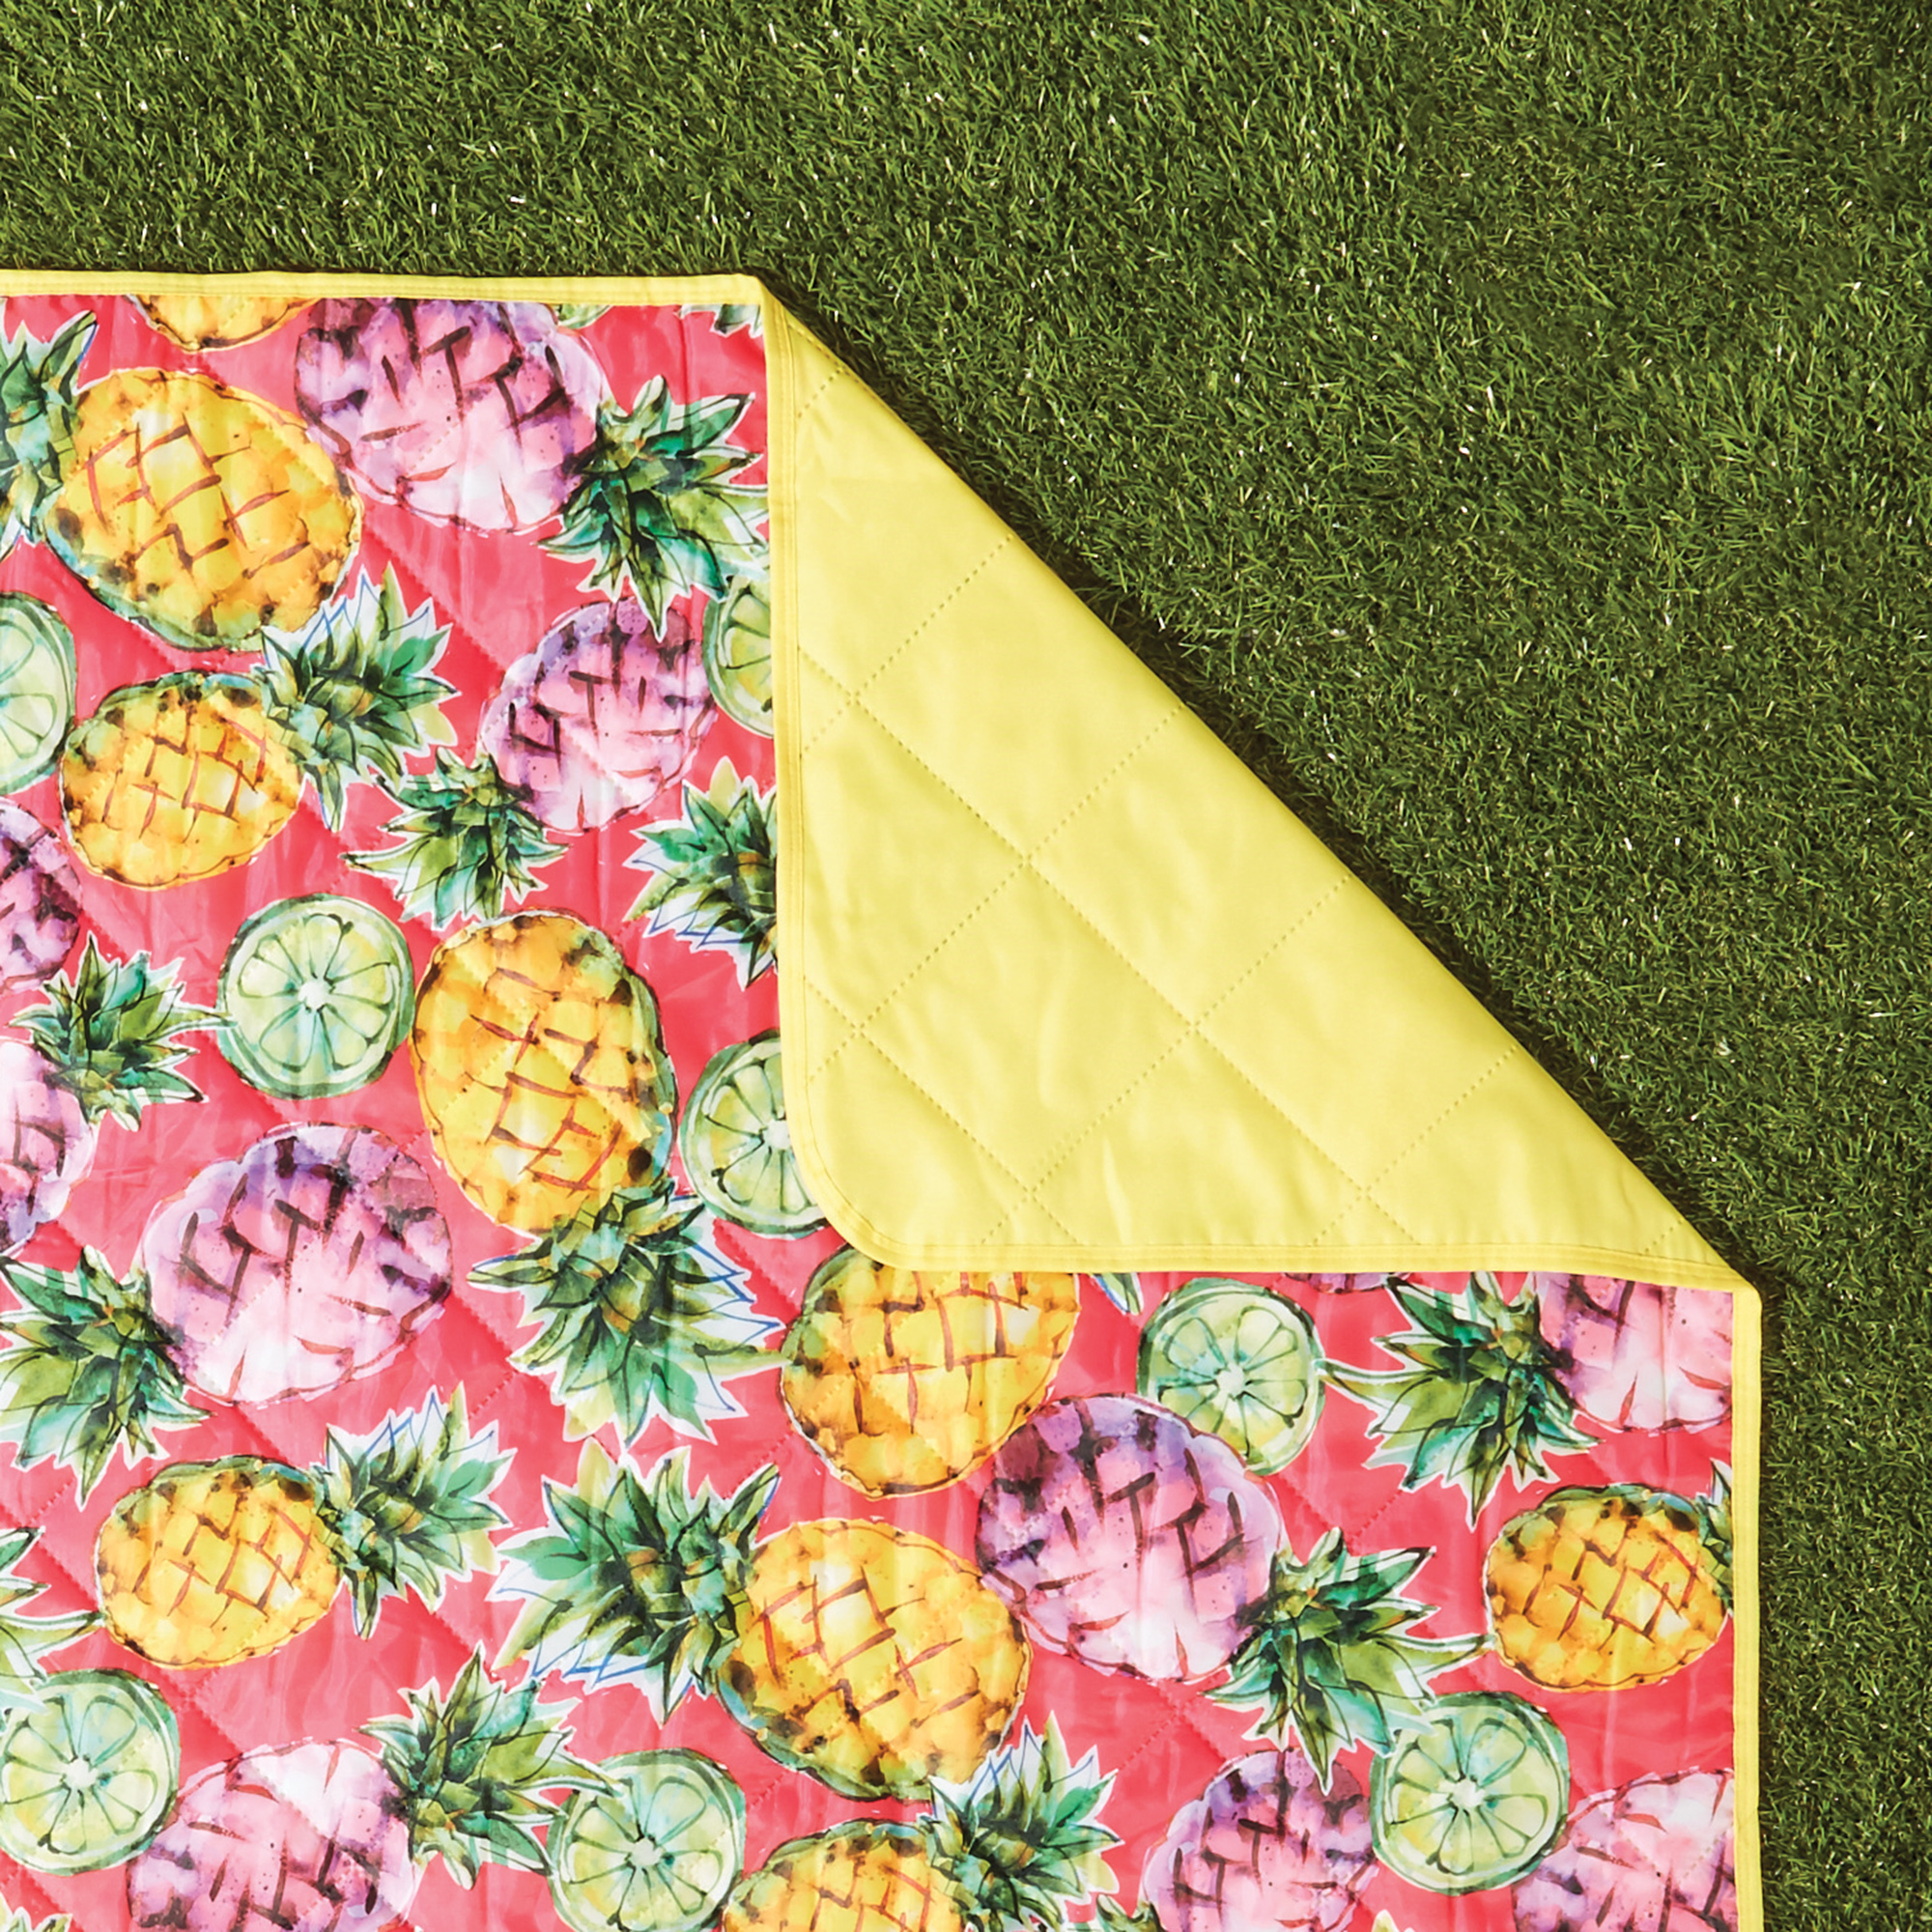 Mainstays Pineapple Outdoor Blanket, 1 Each - image 3 of 4